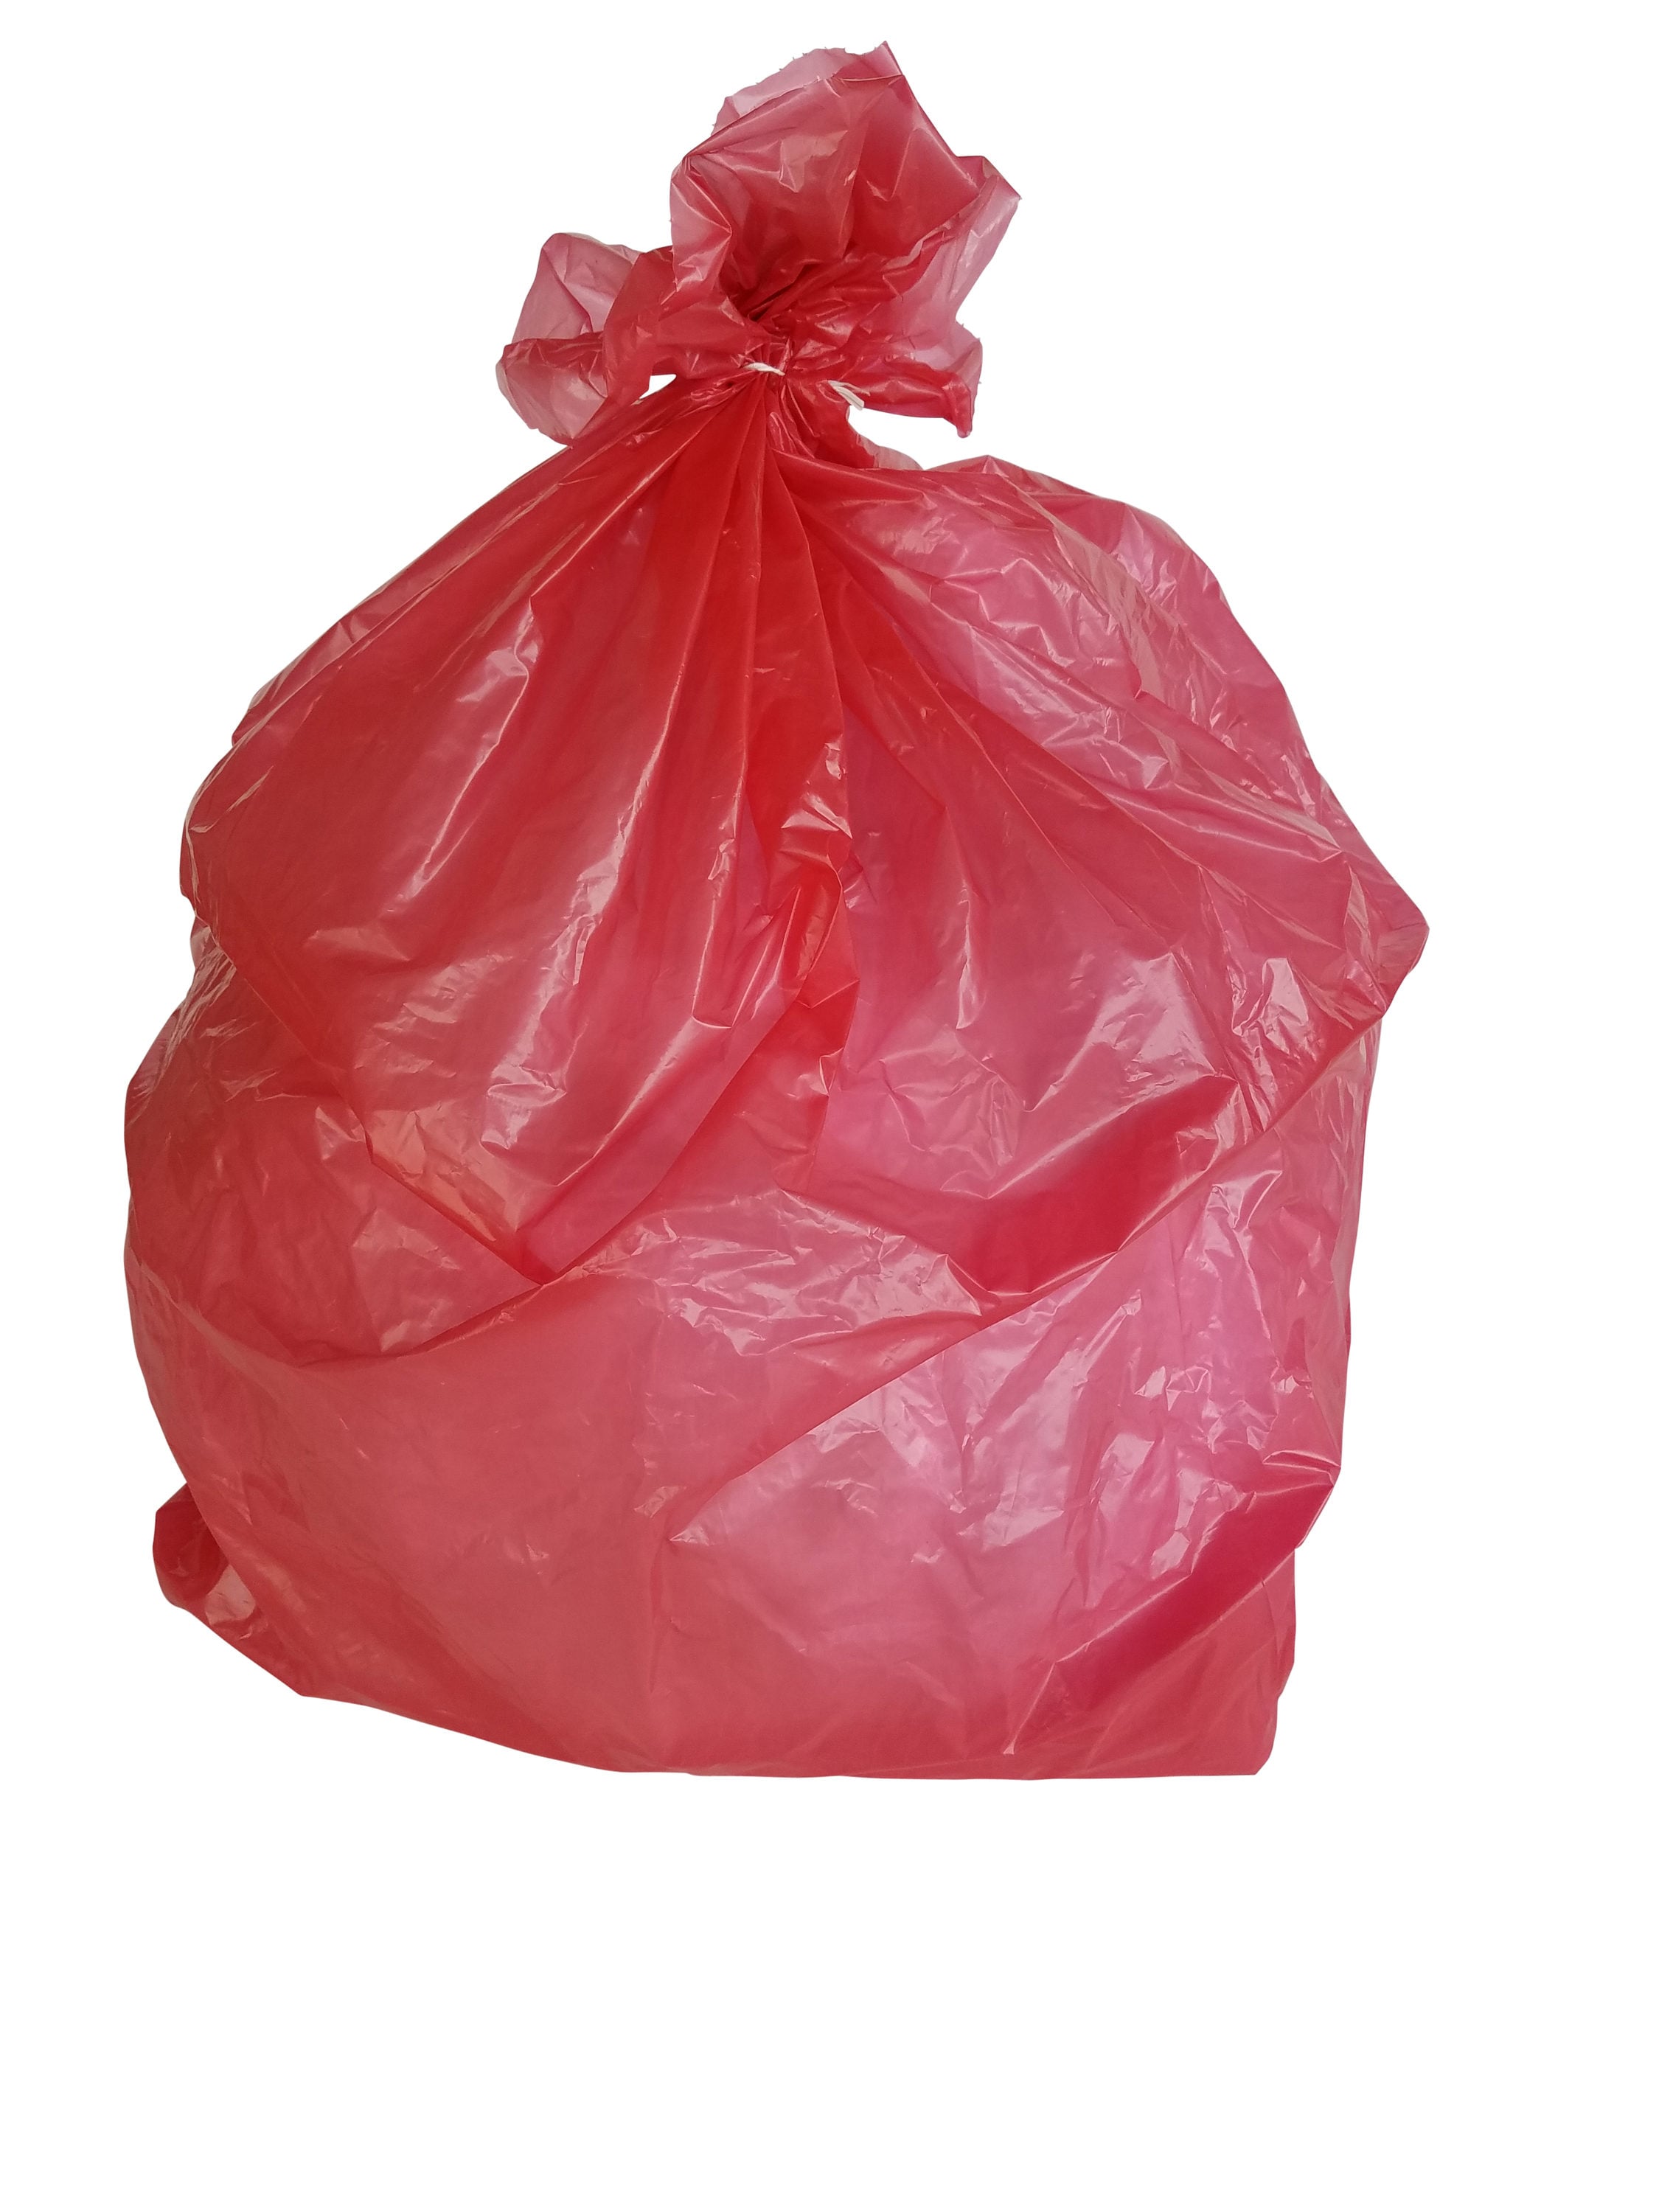 33 Gallon Black Low Density EZ Tie Closure Trash Bag (100-Count